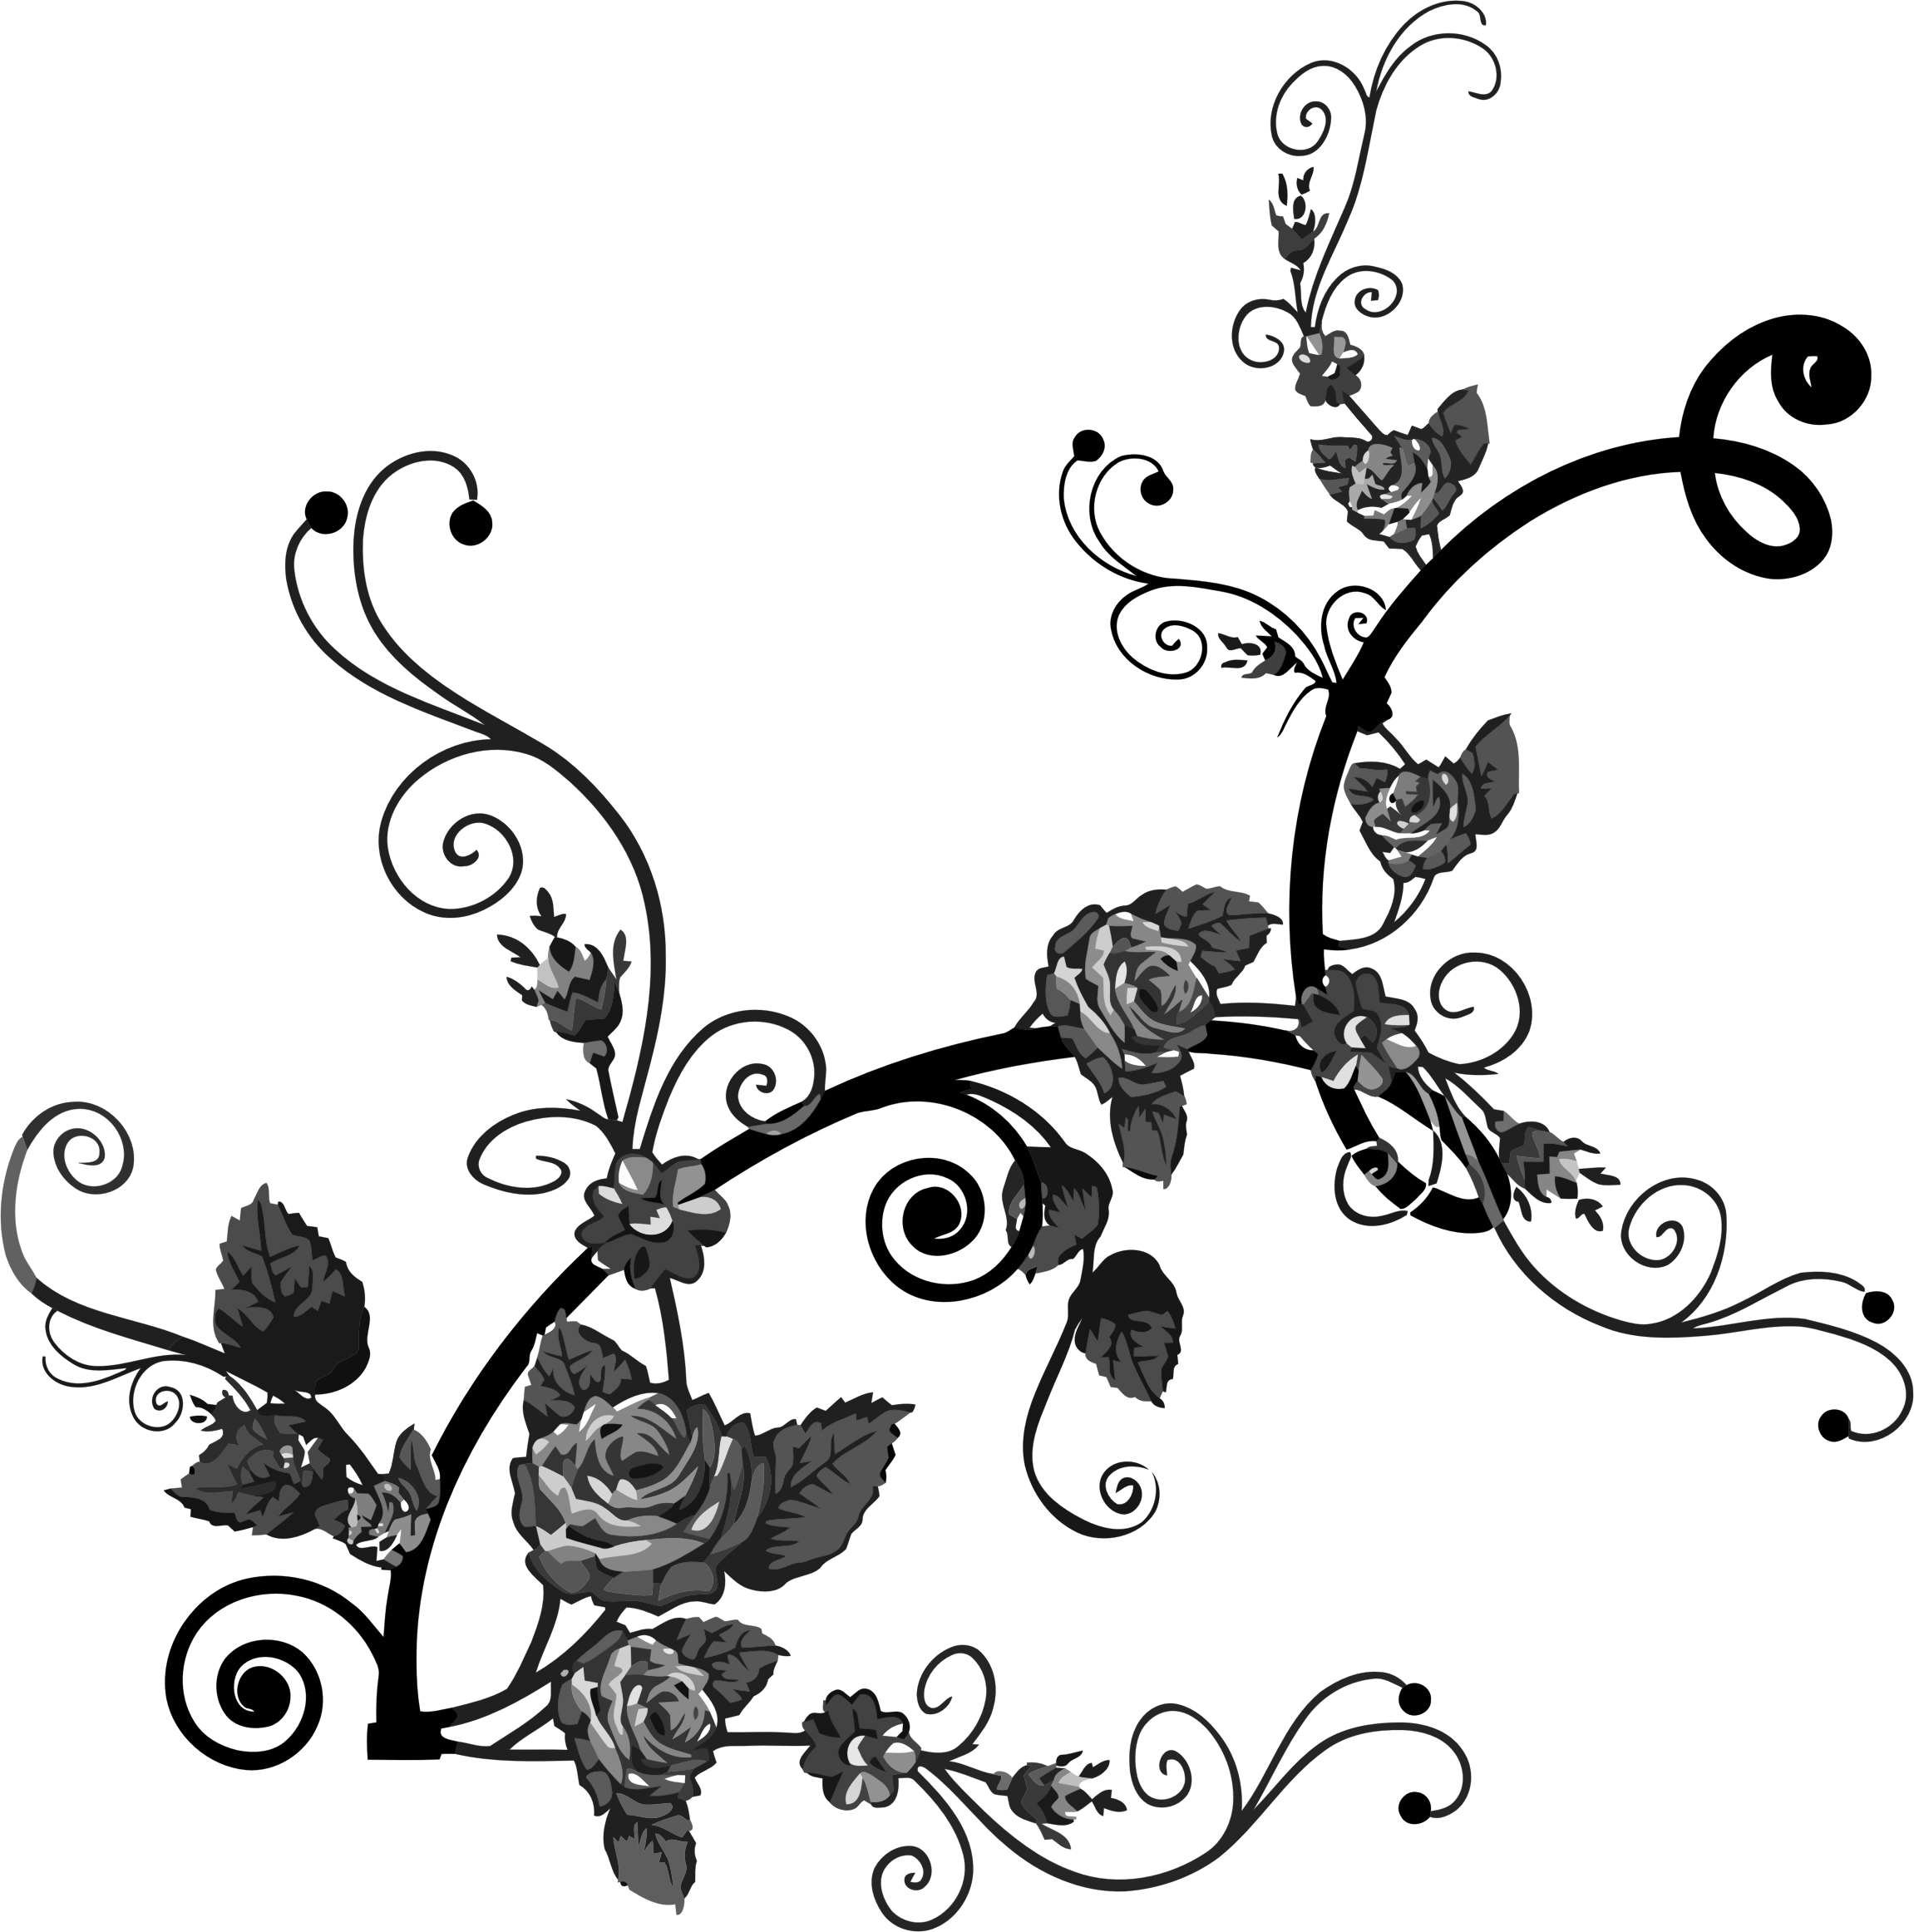 Design clipart rose, Design rose Transparent FREE for ... - Black and White Rose Mural